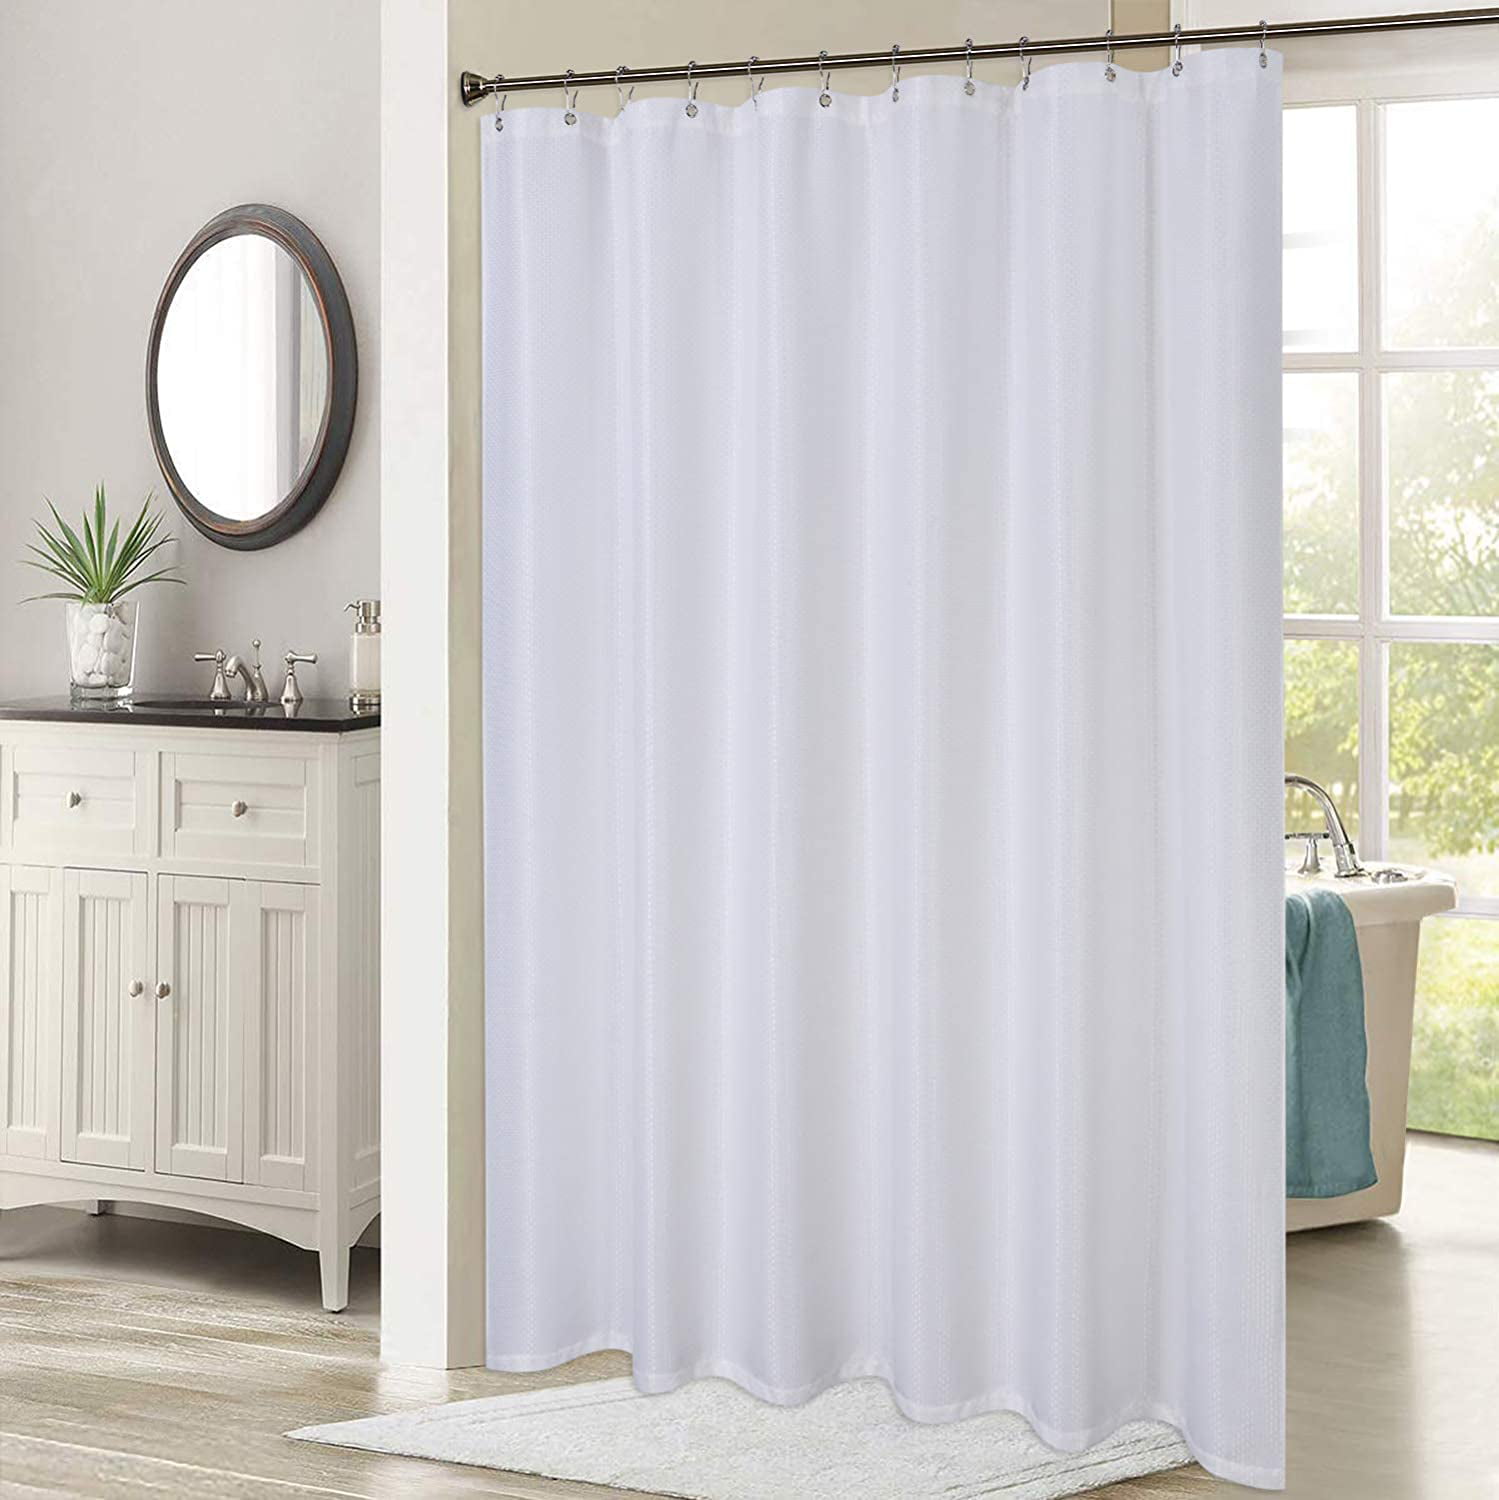 Caromio Extra Long Shower Curtain 84, Extra Long Chevron Shower Curtain